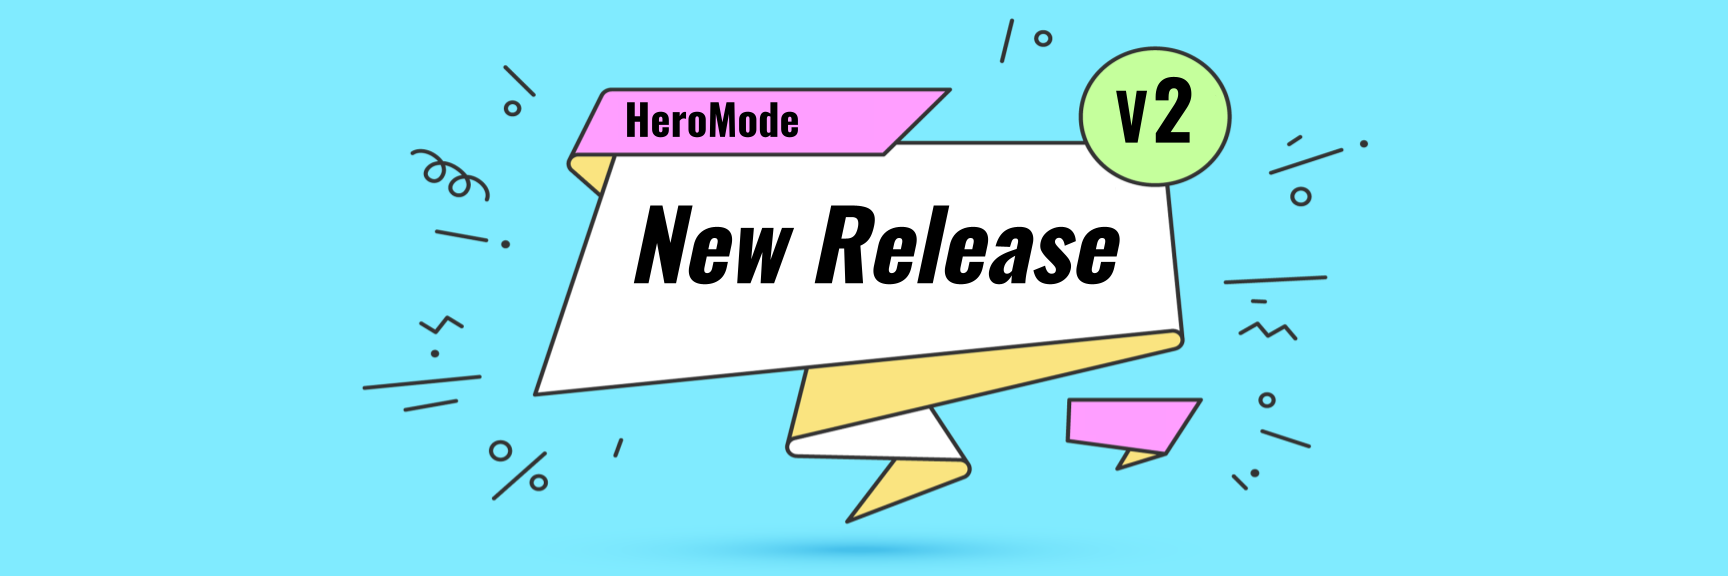 heromode v2 ios app has been released in the app store